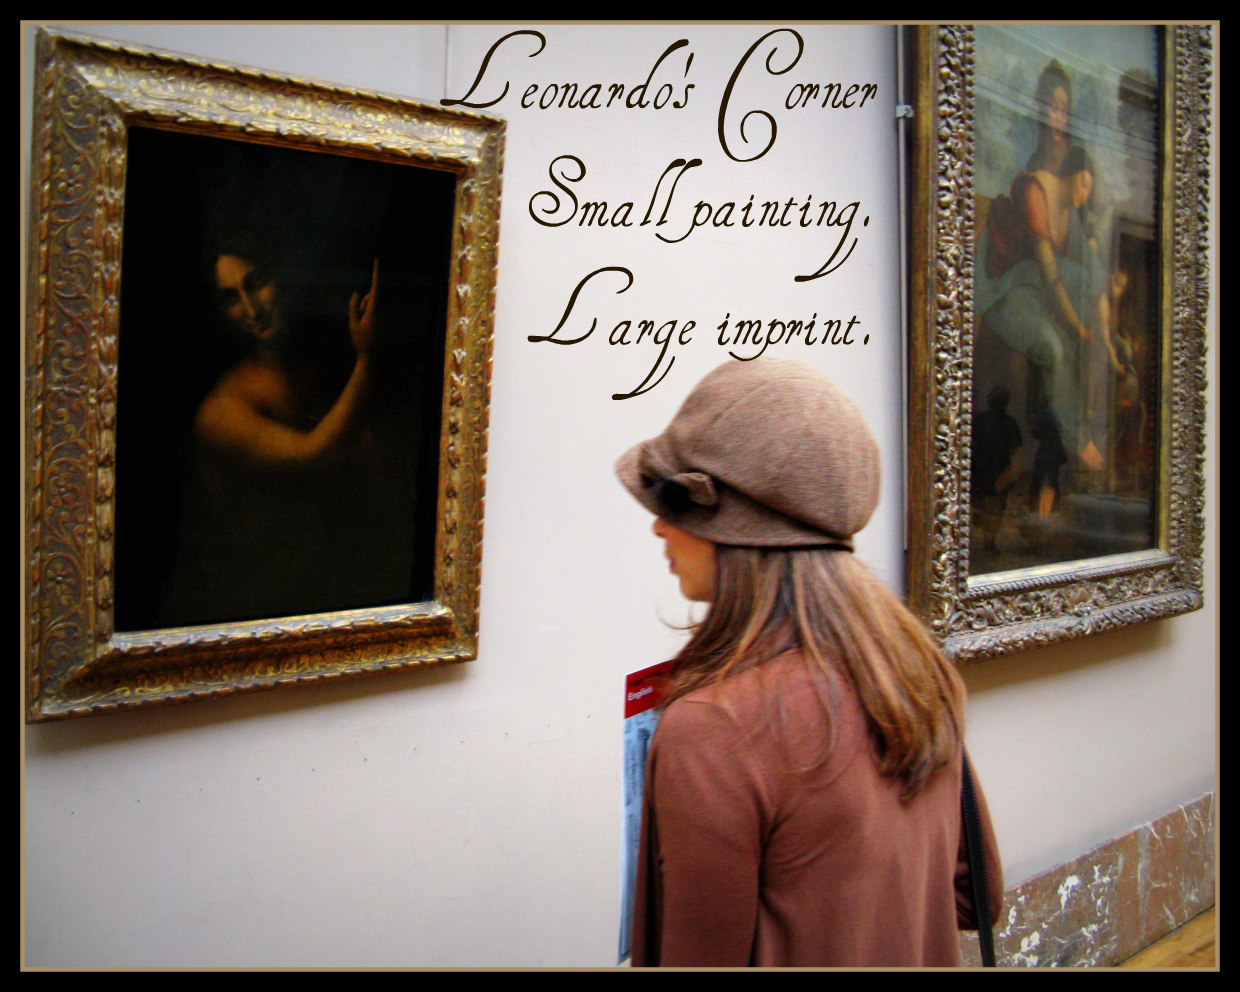 Walking the Leonardo corner in Louvre Paris